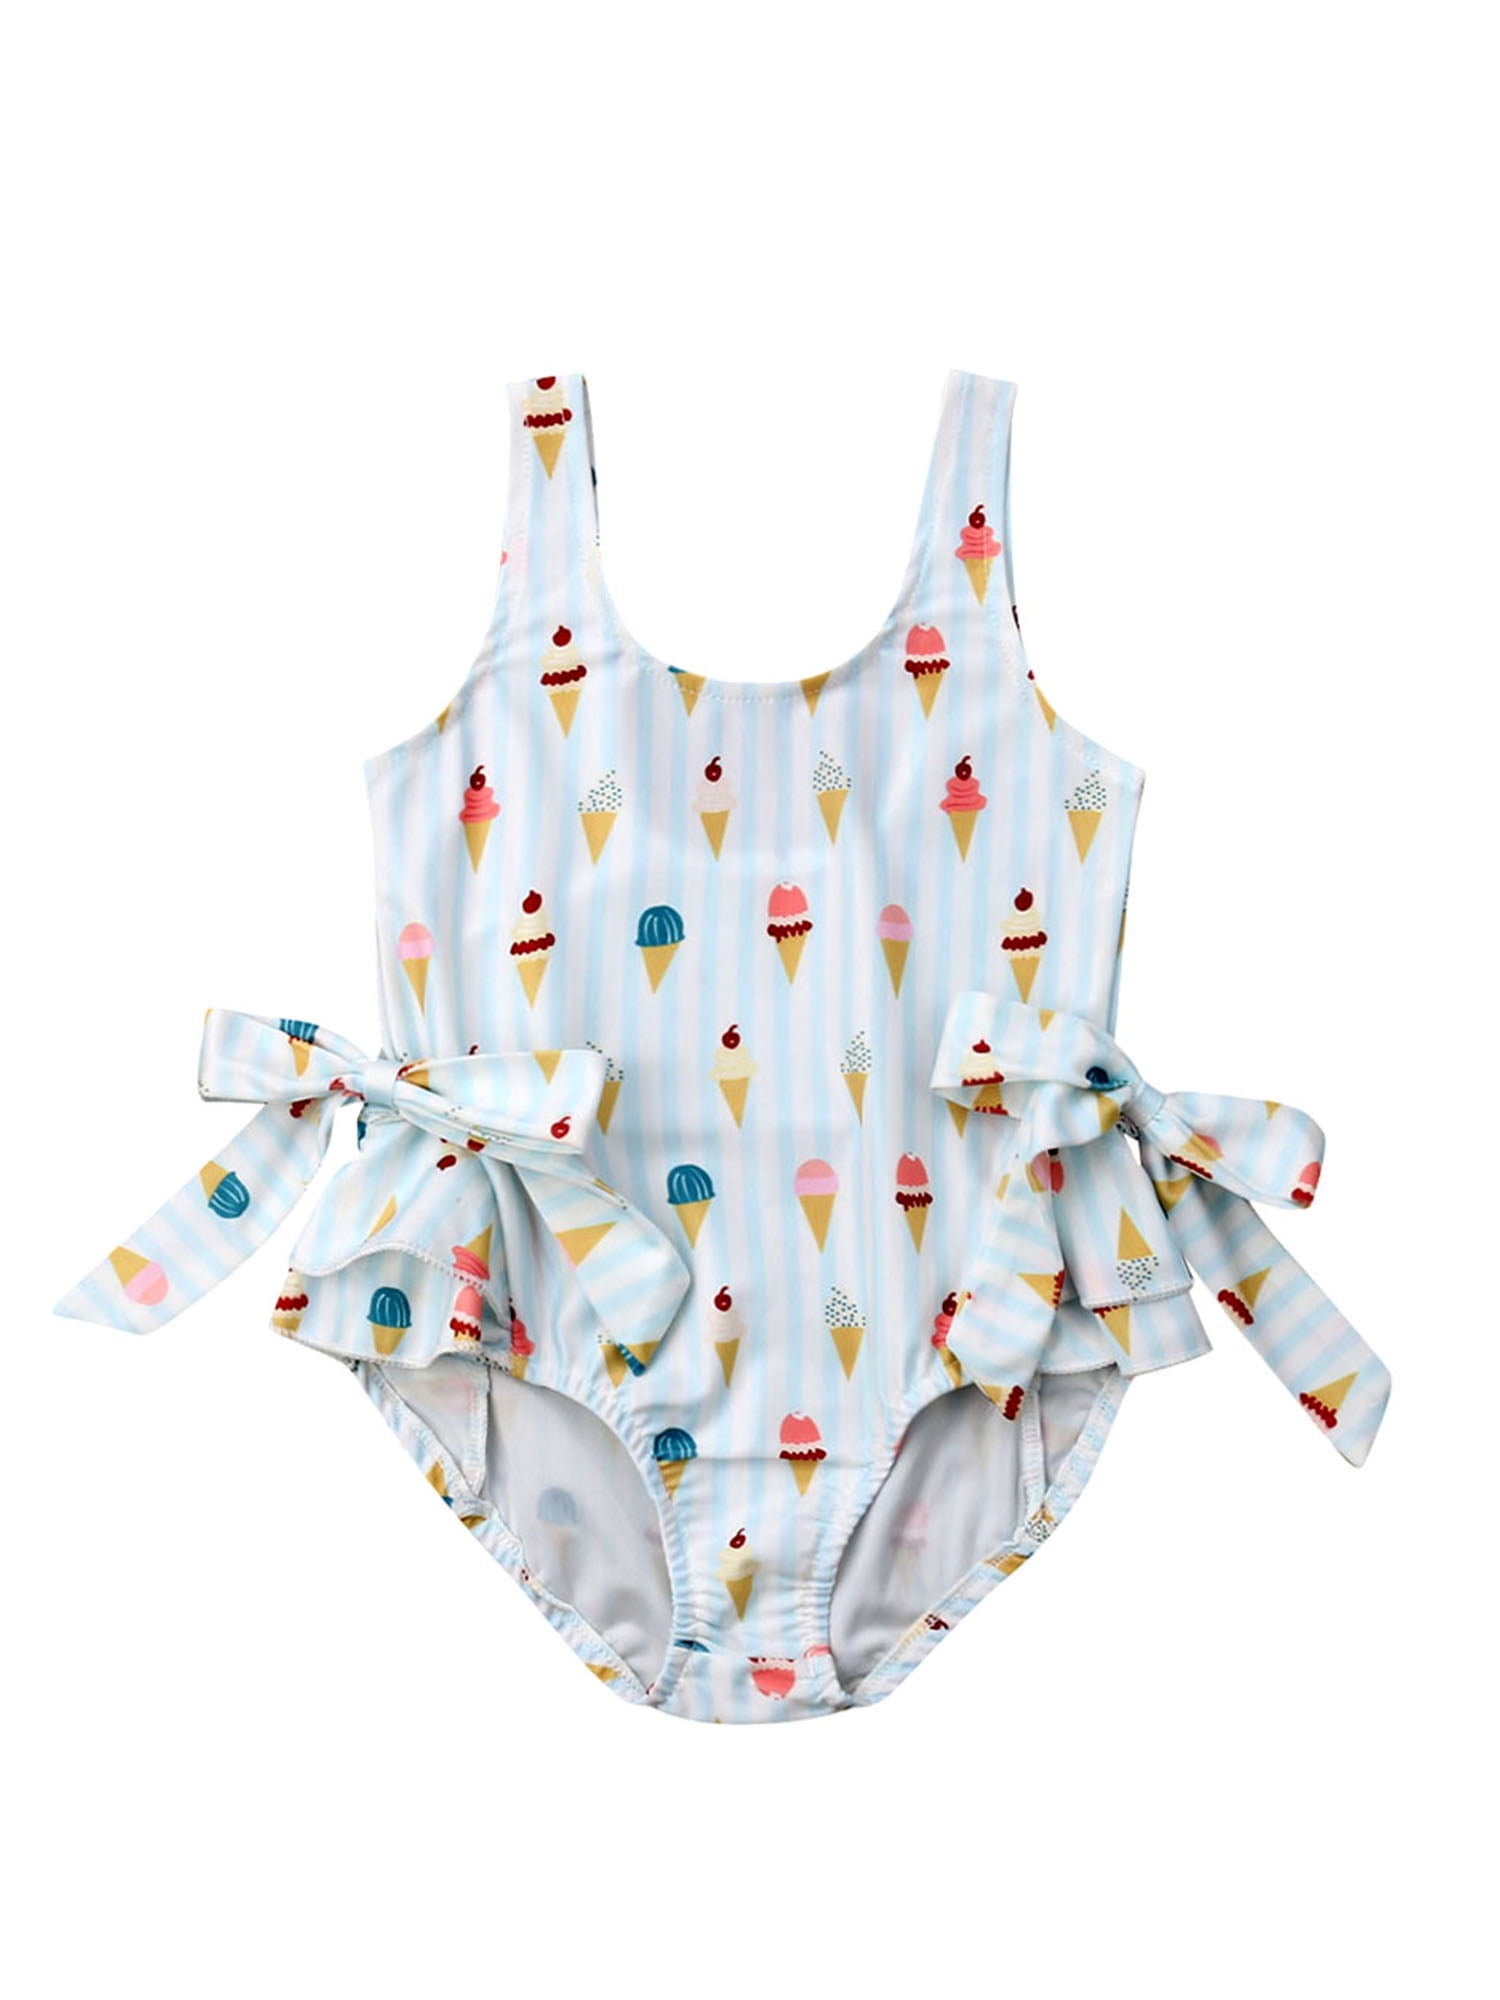 2019 Hot Sale Cuekondy Toddler Baby Girls Kids Cute Ice-cream Printed One Piece Swimsuit Swimwear Bathing Suit Beachwear